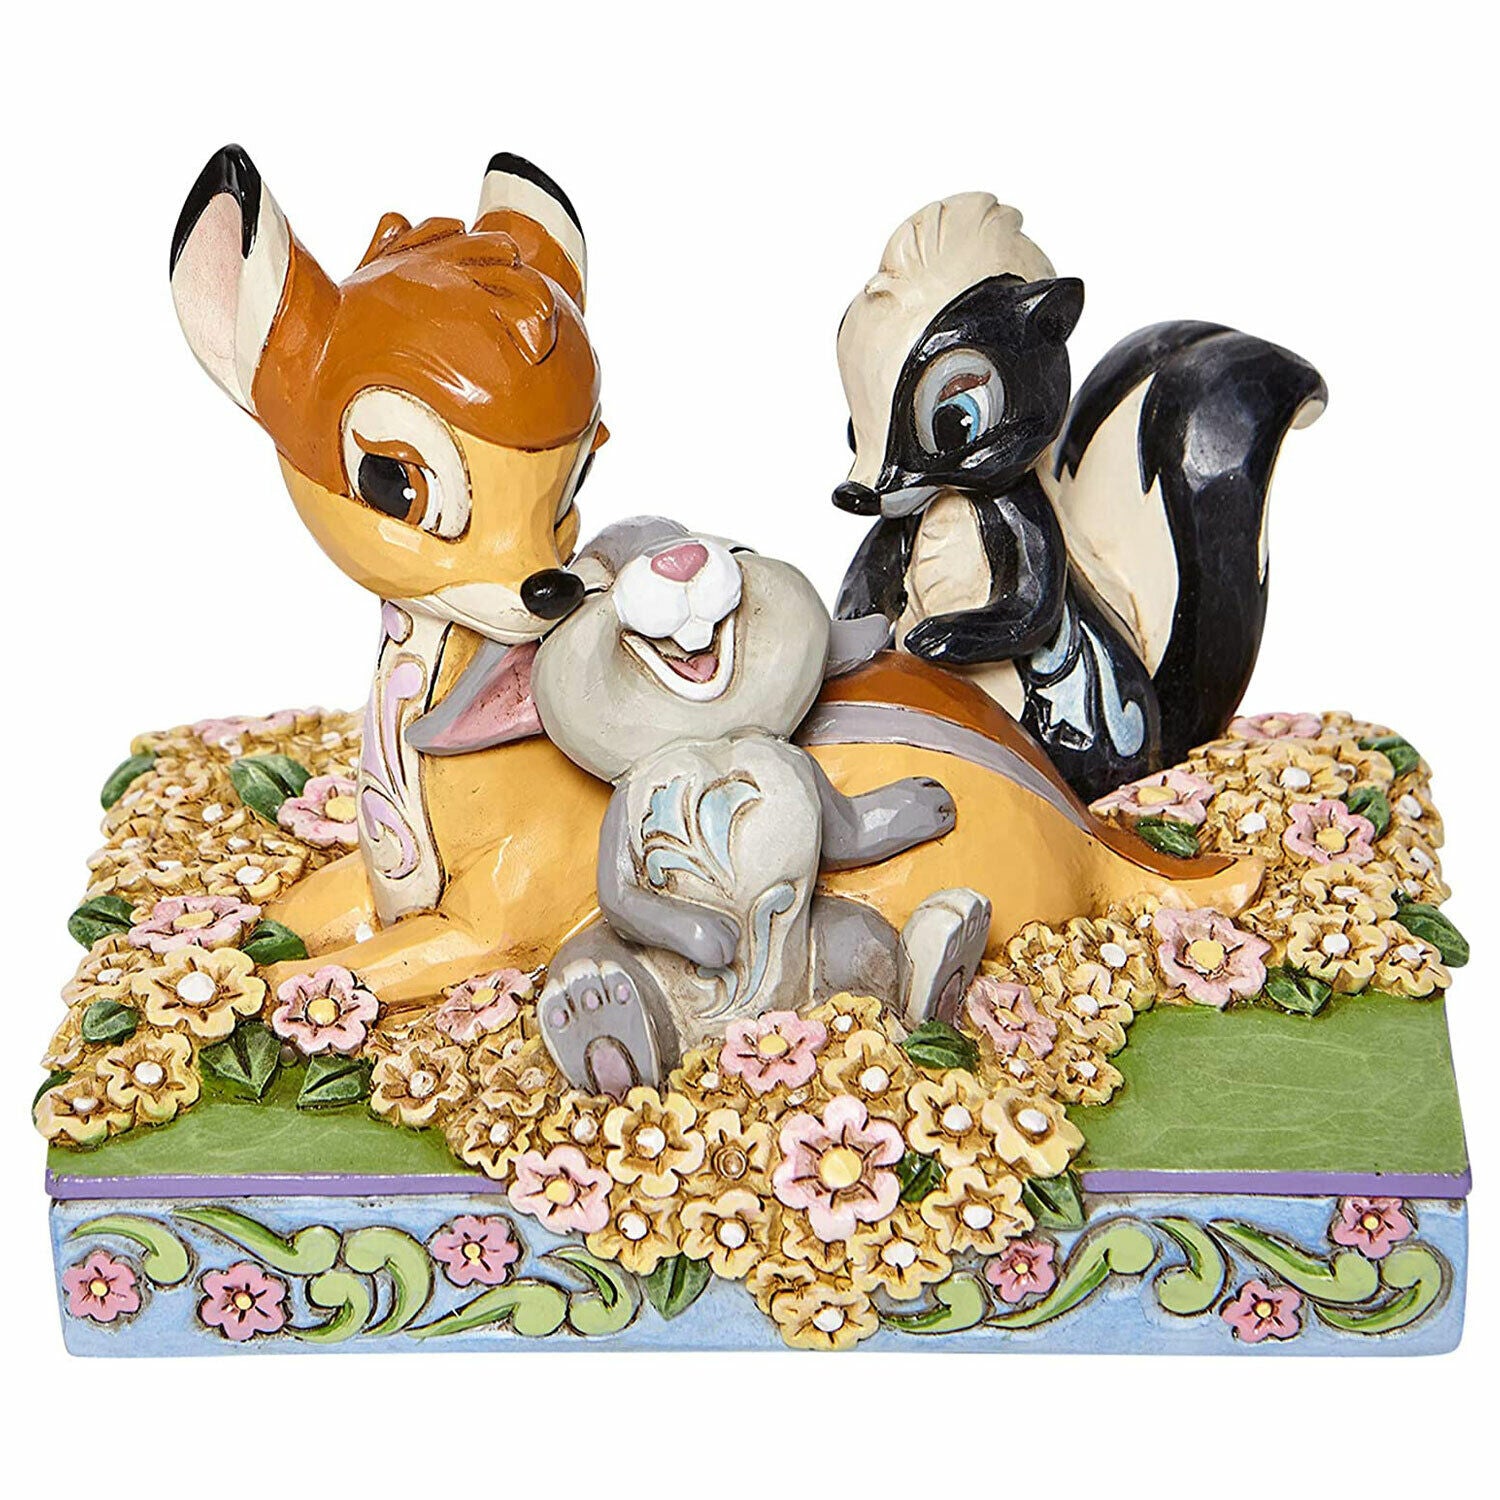 New Disney Traditions Bambi Childhood Friends Figurine